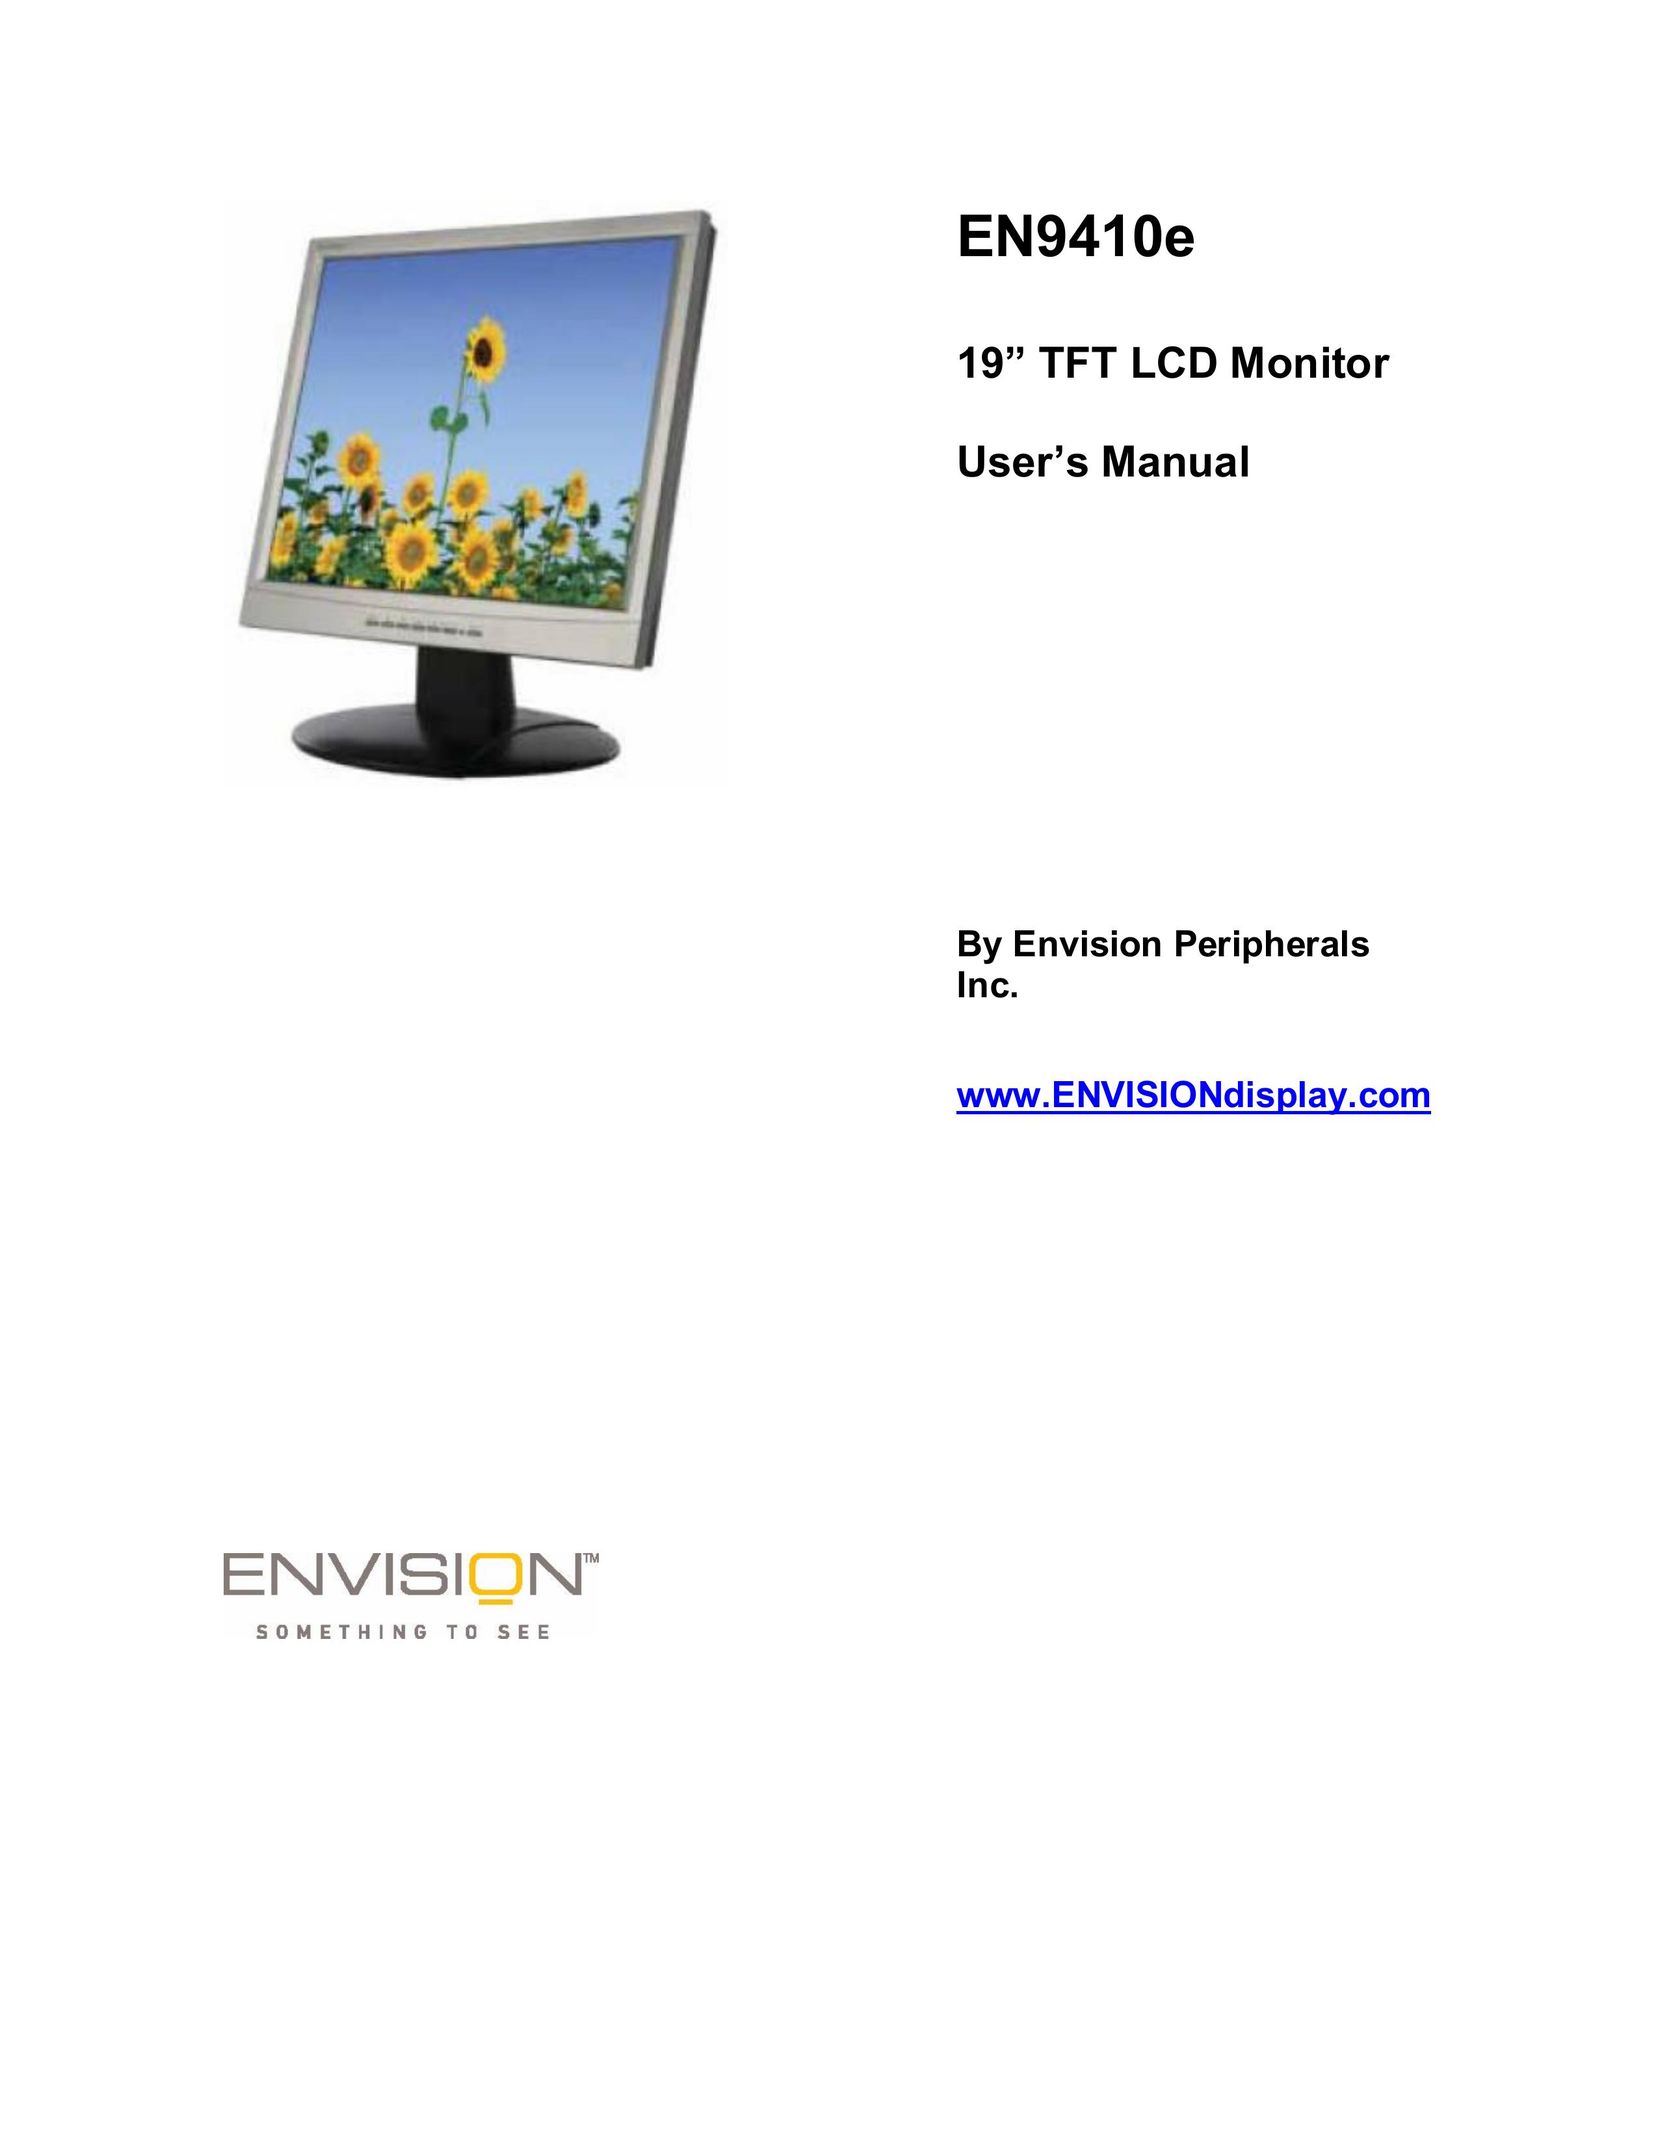 Envision Peripherals EN9410e Computer Monitor User Manual